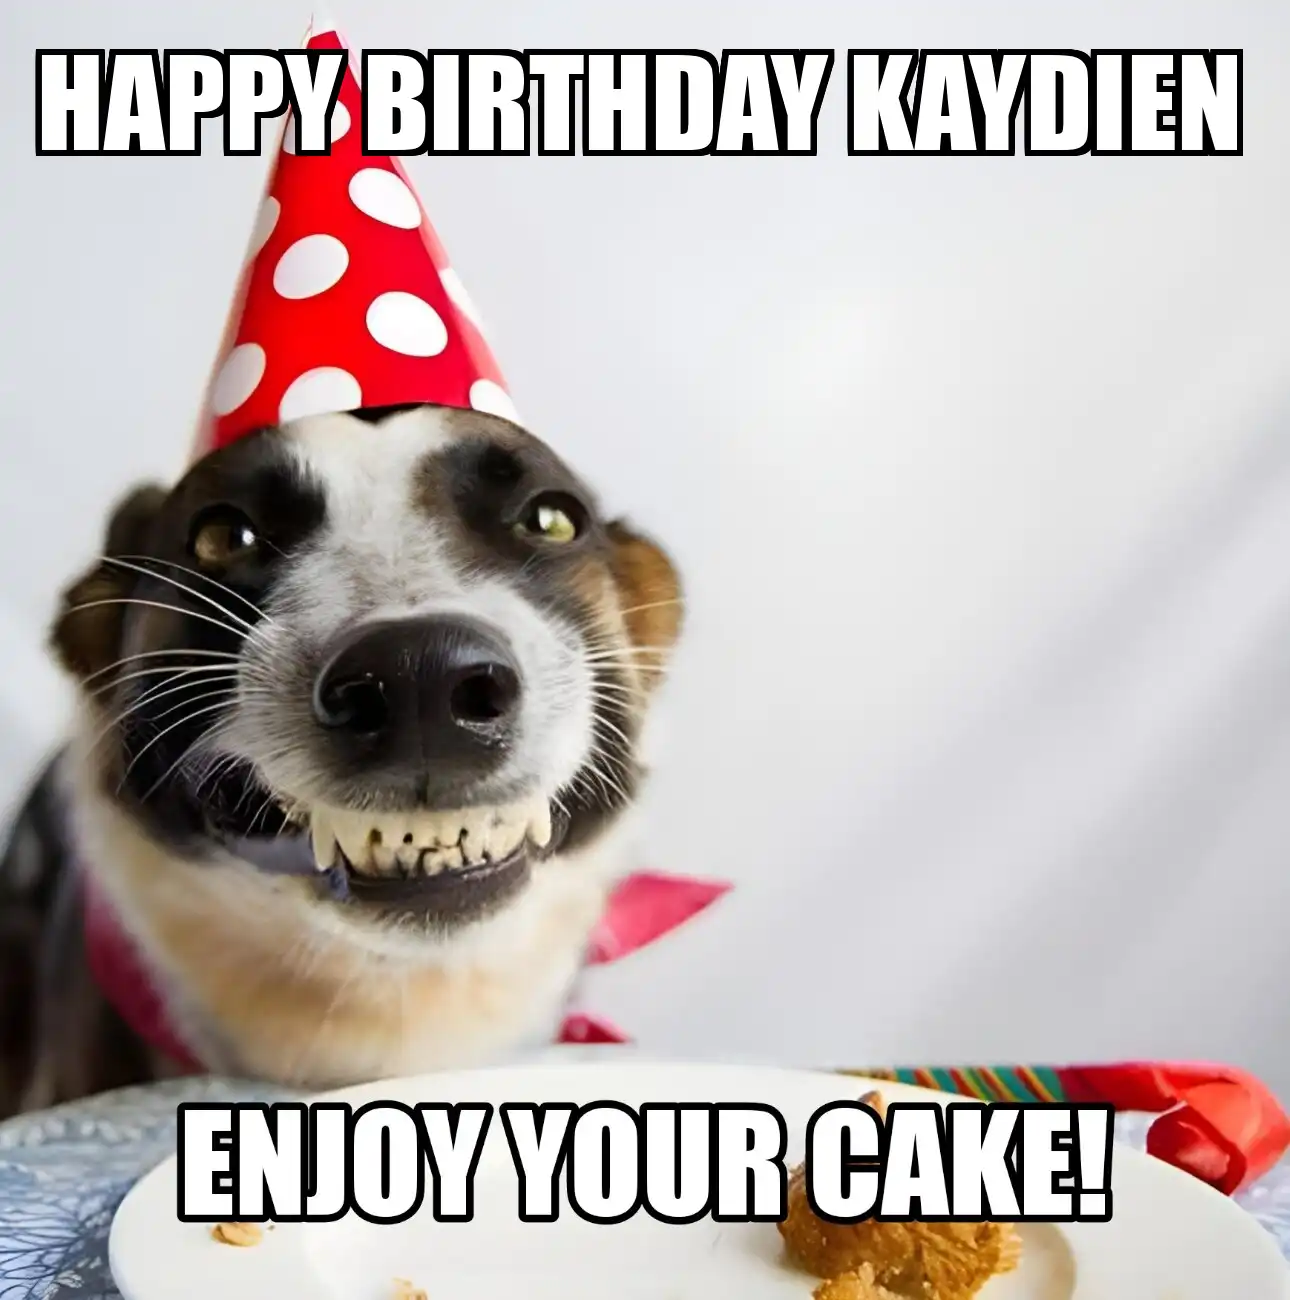 Happy Birthday Kaydien Enjoy Your Cake Dog Meme